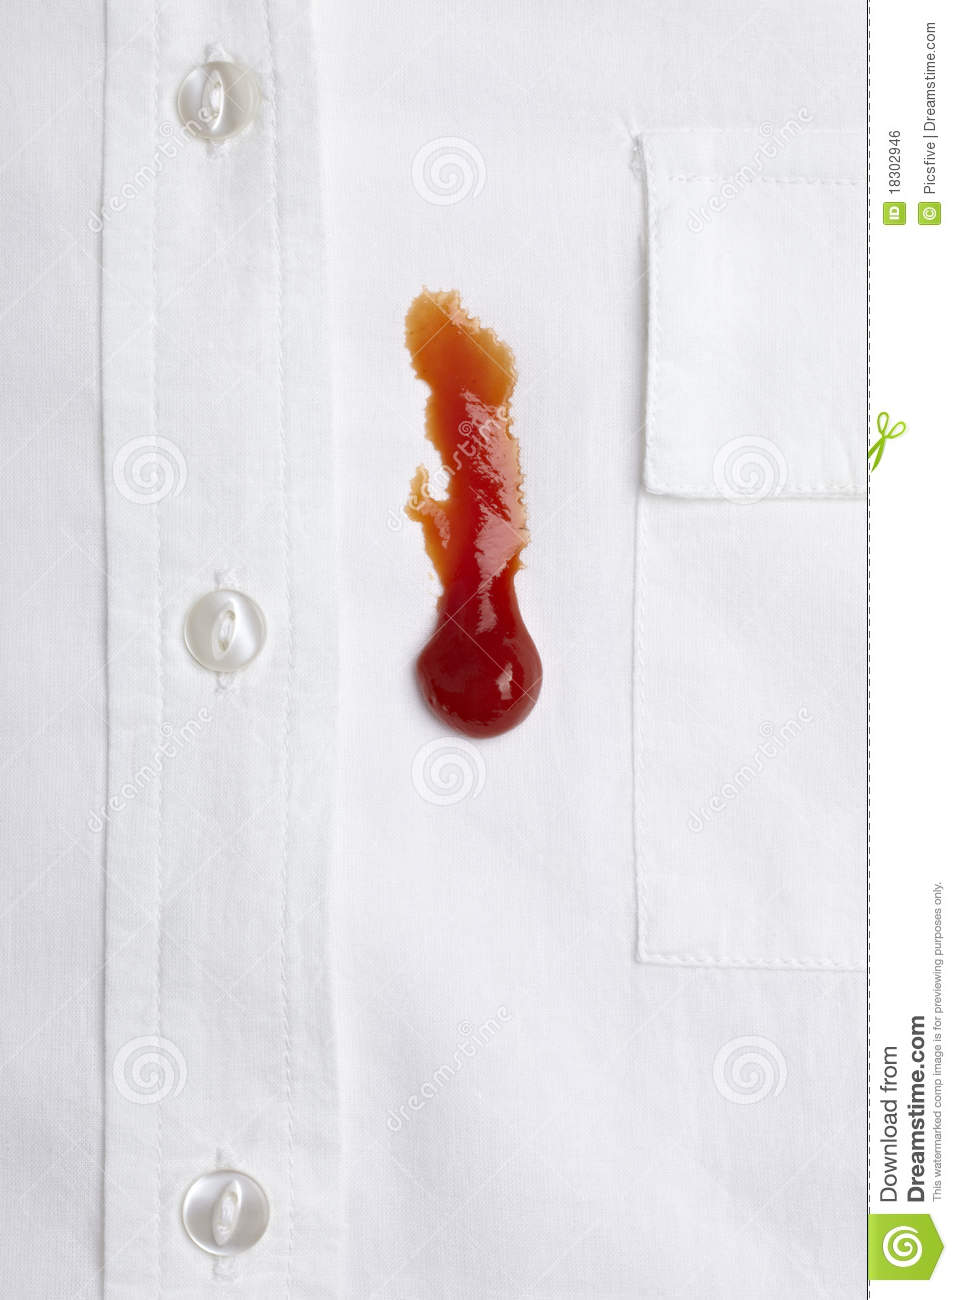 Ketchap Stain On White Shirt Royalty Free Stock Image   Image